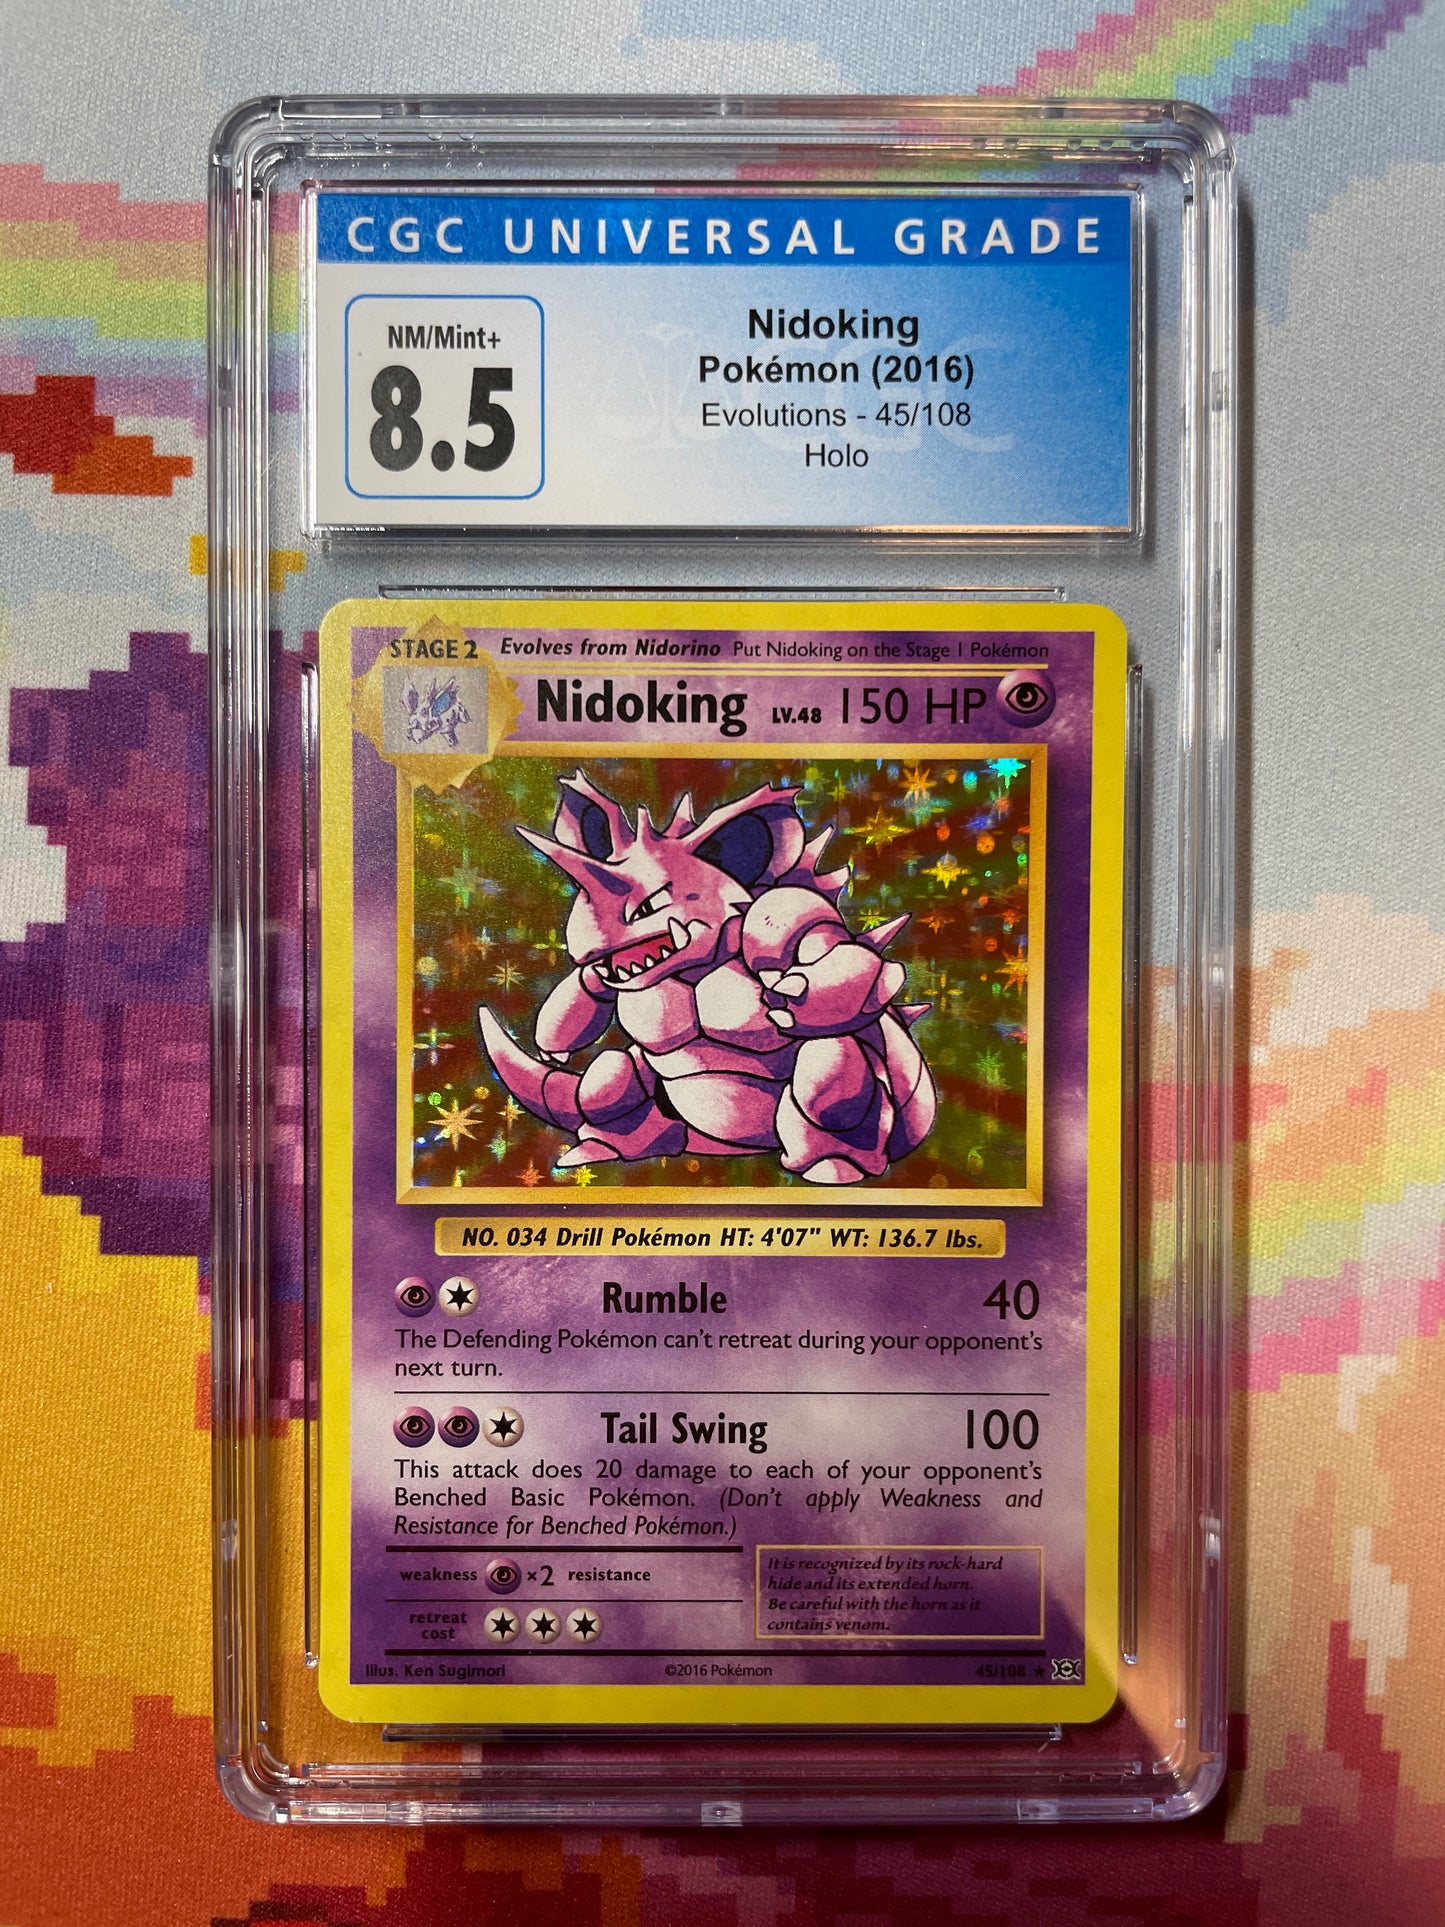 2016 Pokémon Evolutions Nidoking Holo 45/108 CGC 8.5 NM/Mint+